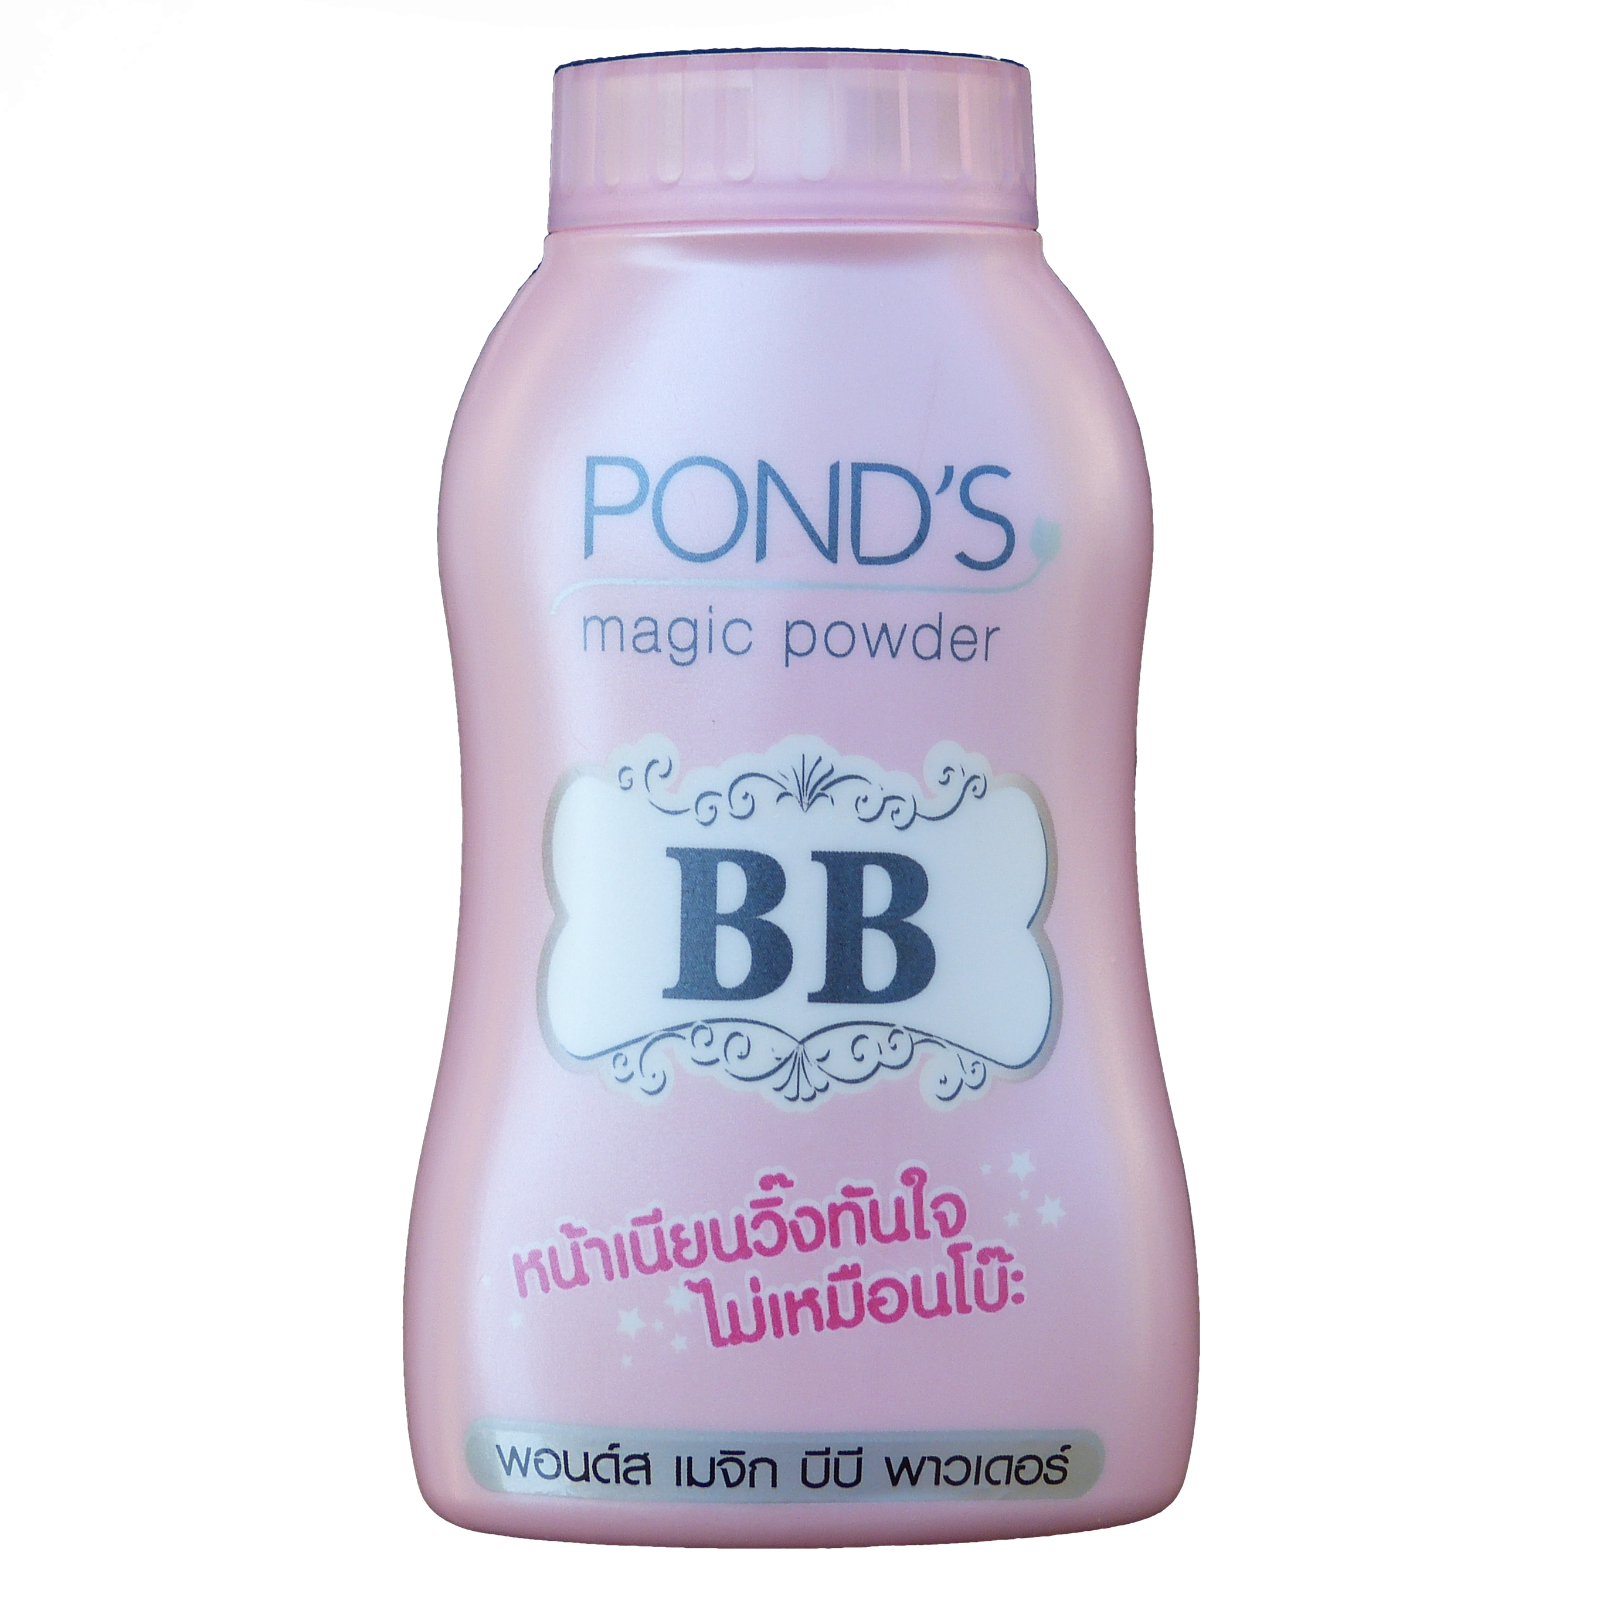 Pond's Magic Powder BB Blemish Control Loose Powder 50 grams - Asian Beauty Supply